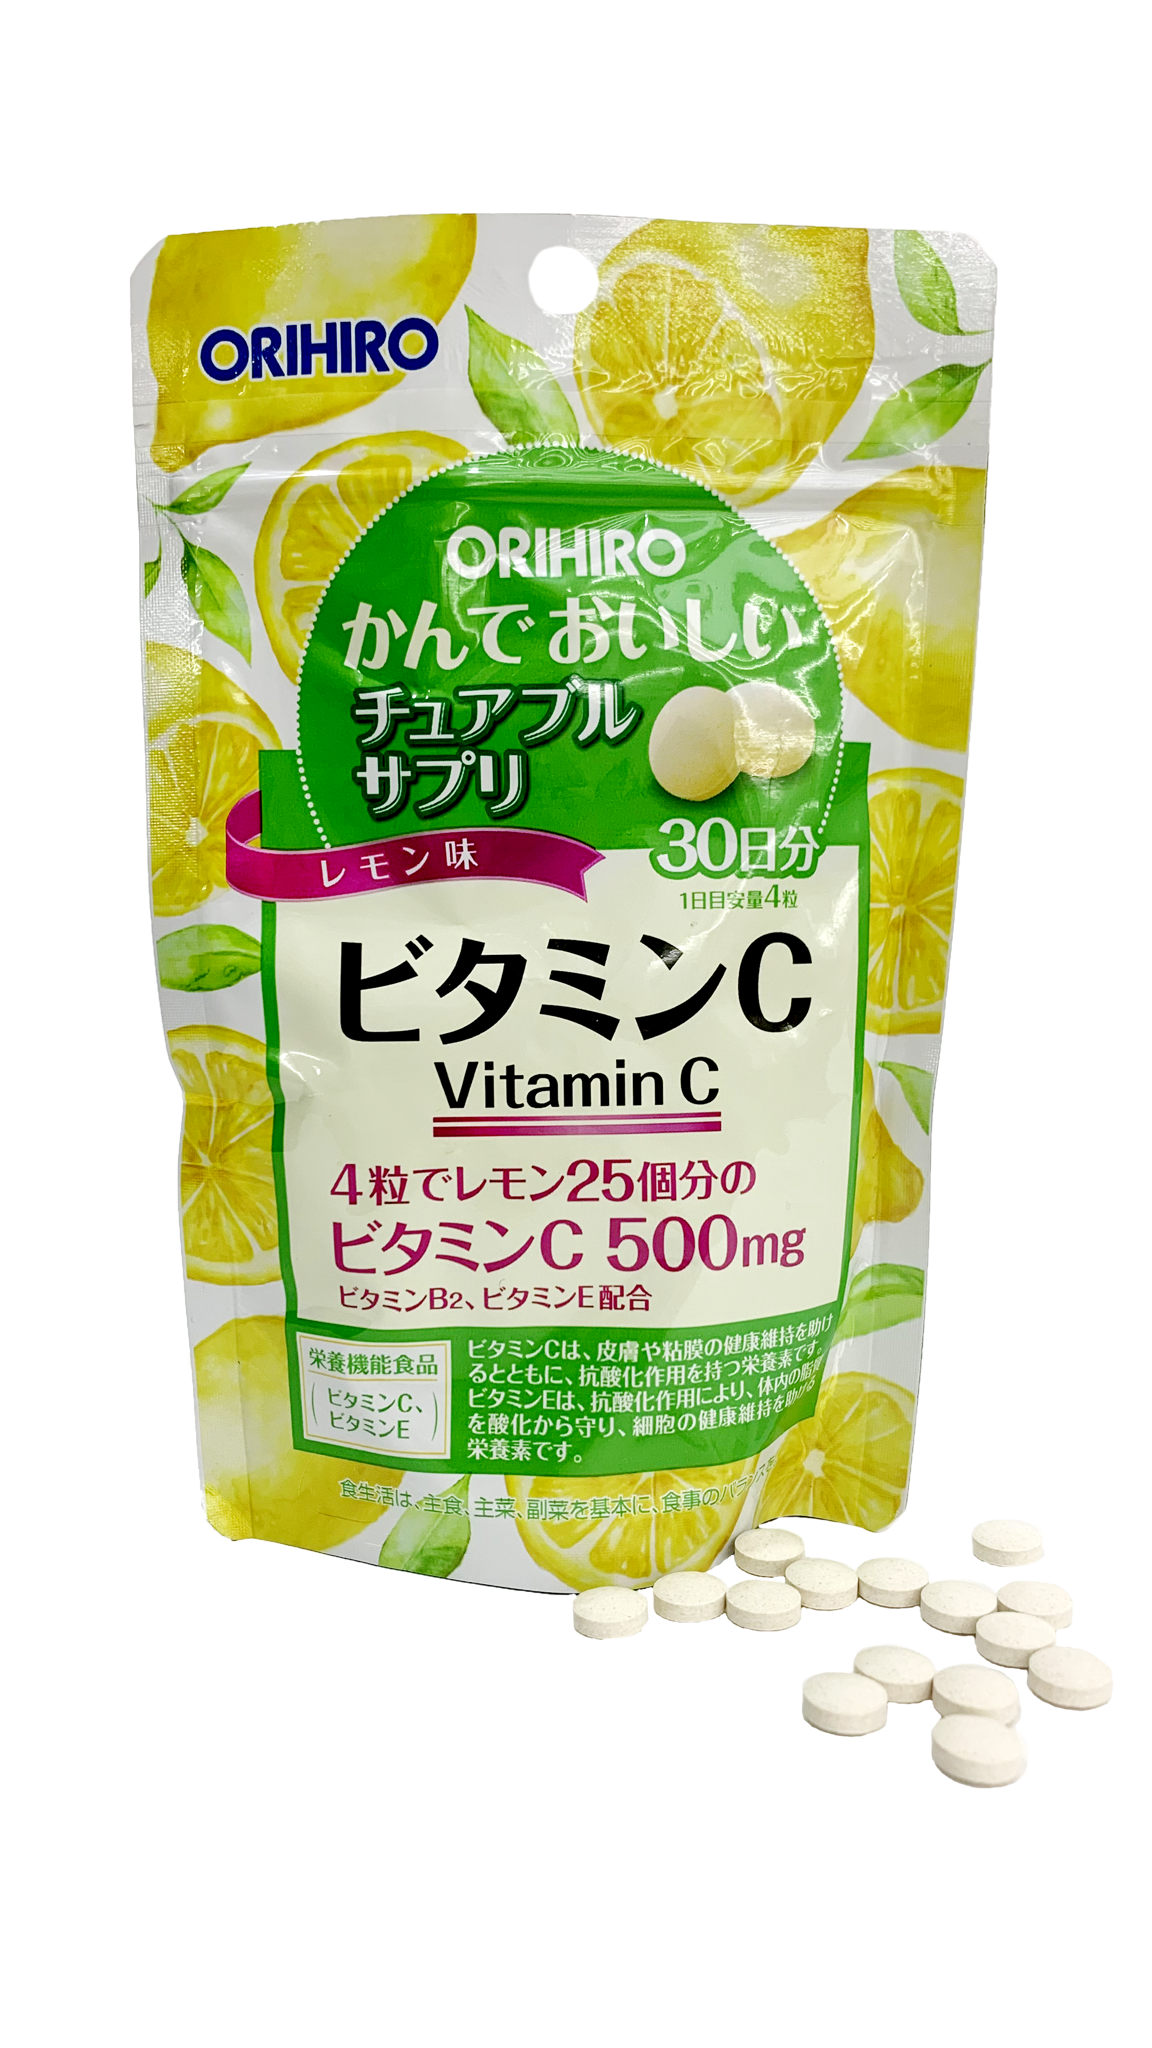 ORIHIRO- Viên nhai bổ sung Vitamin C (120 viên)